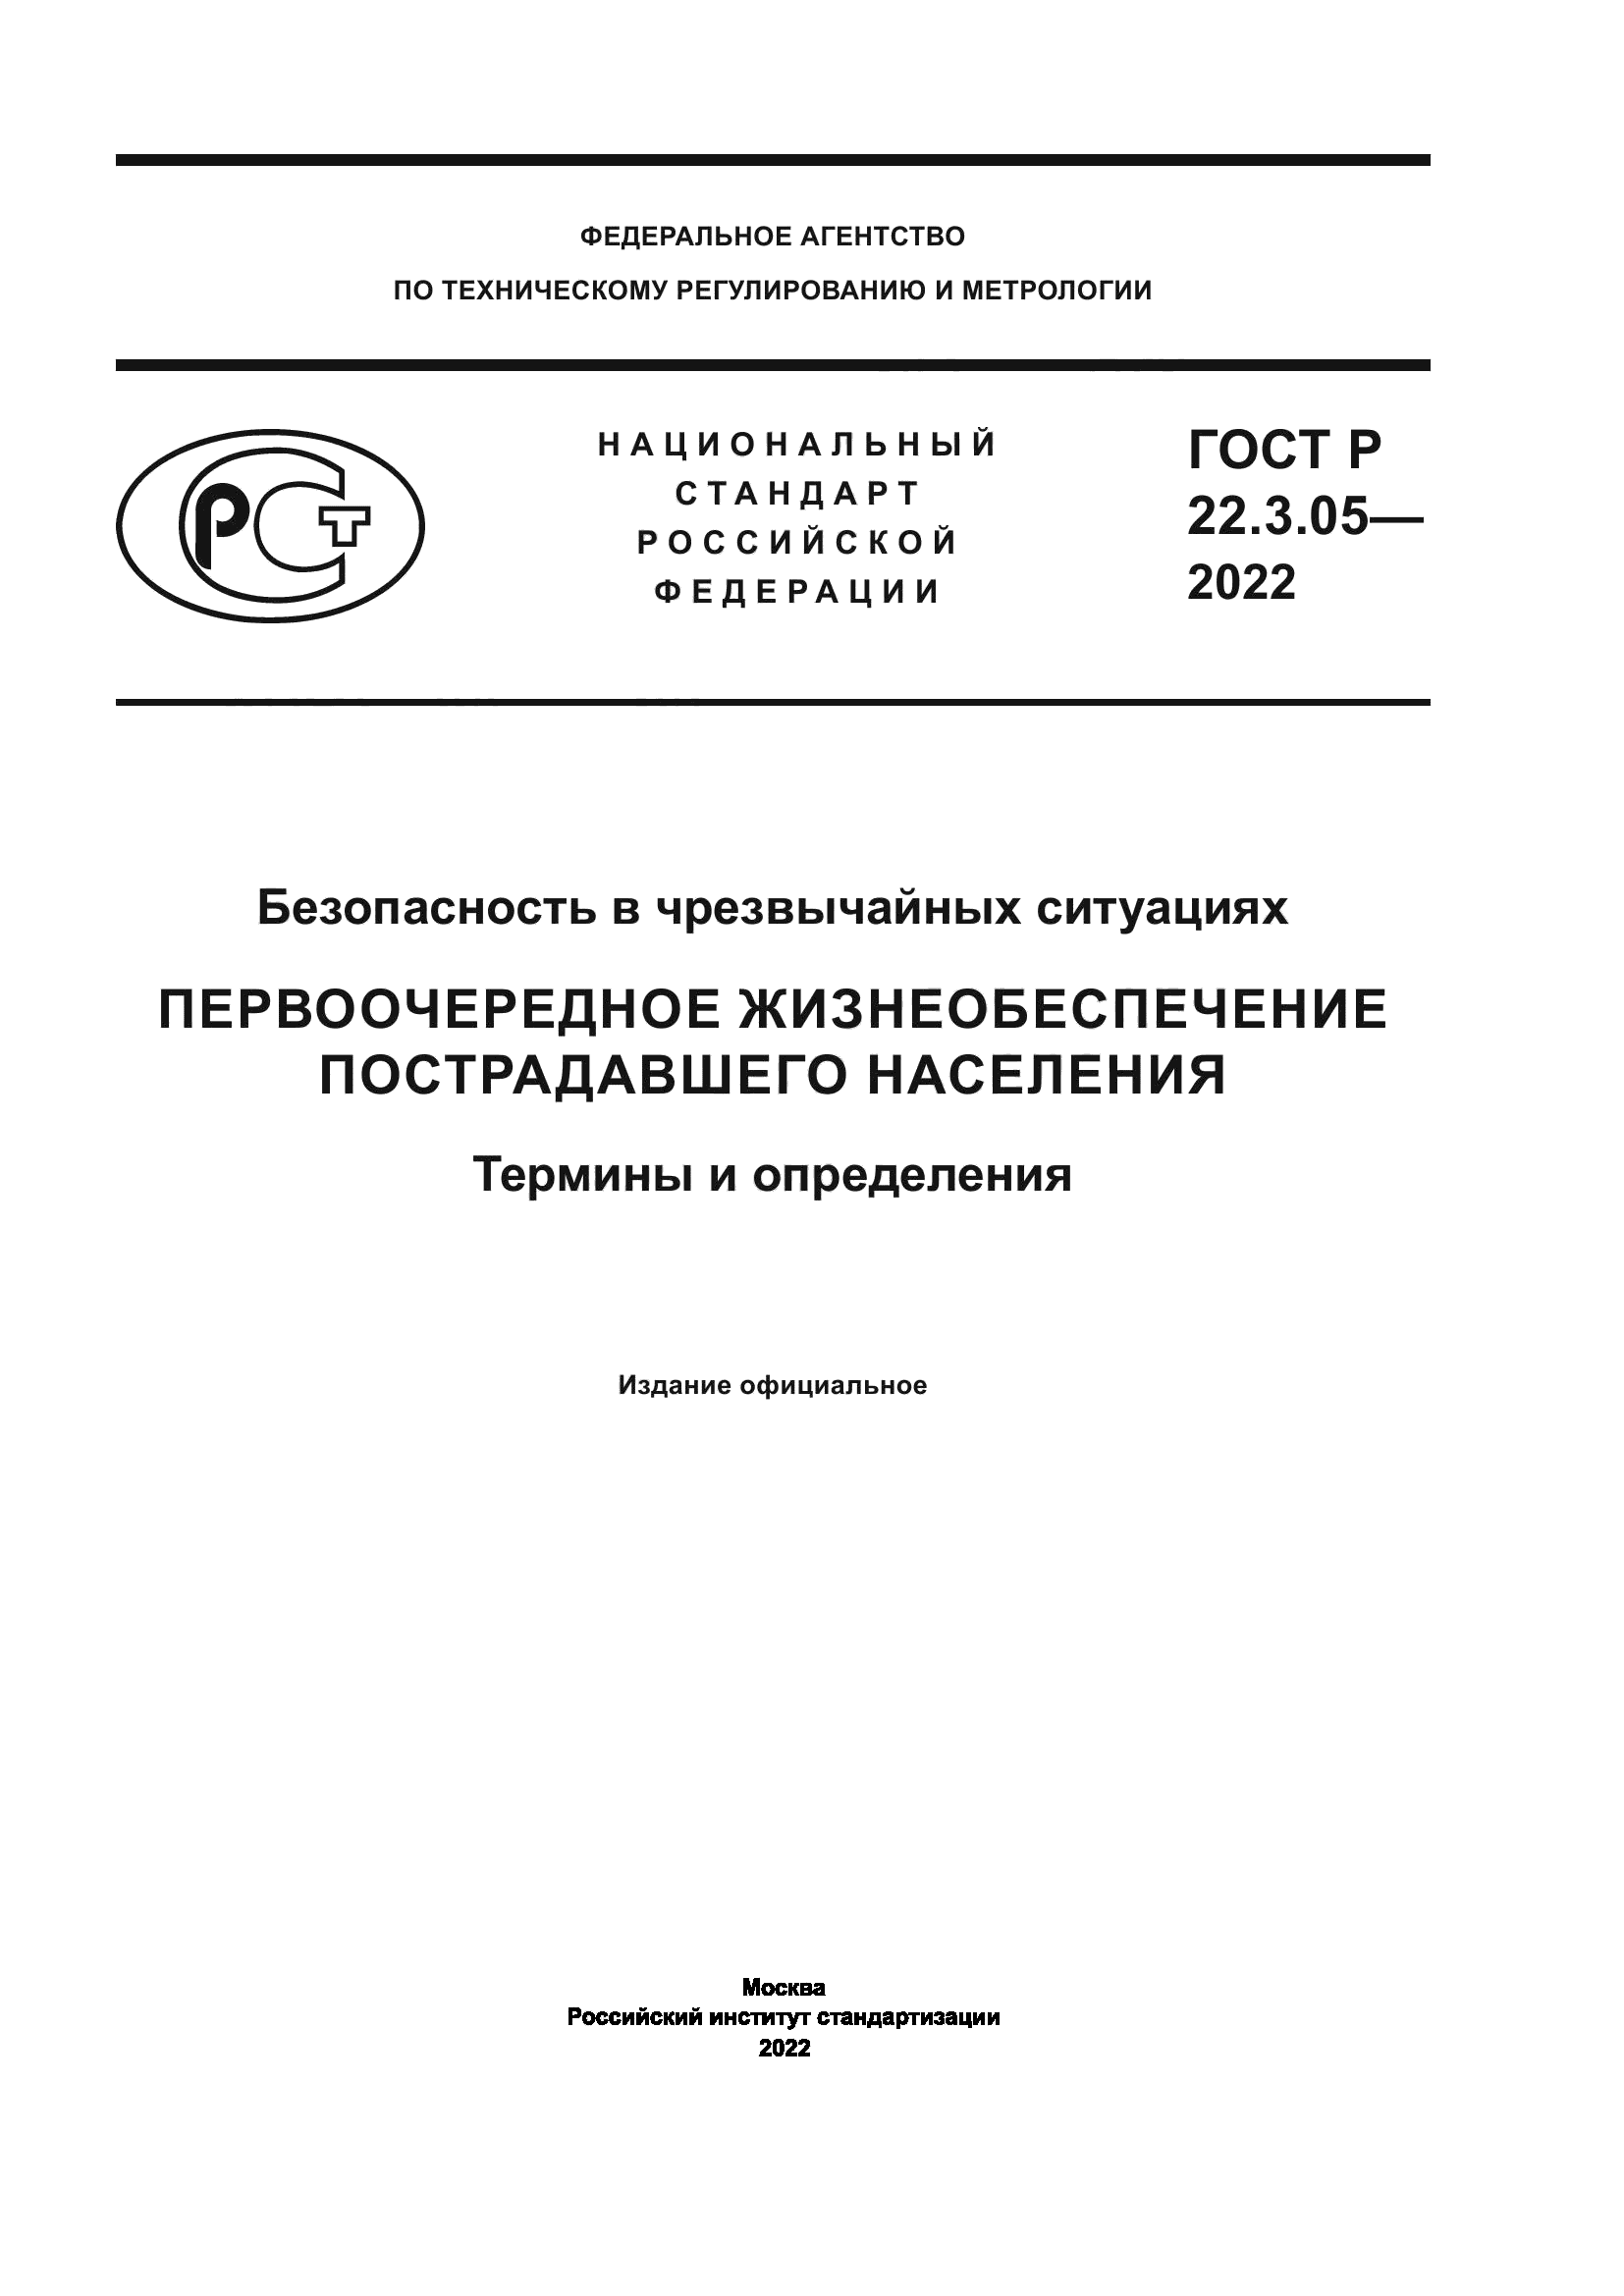 ГОСТ Р 22.3.05-2022